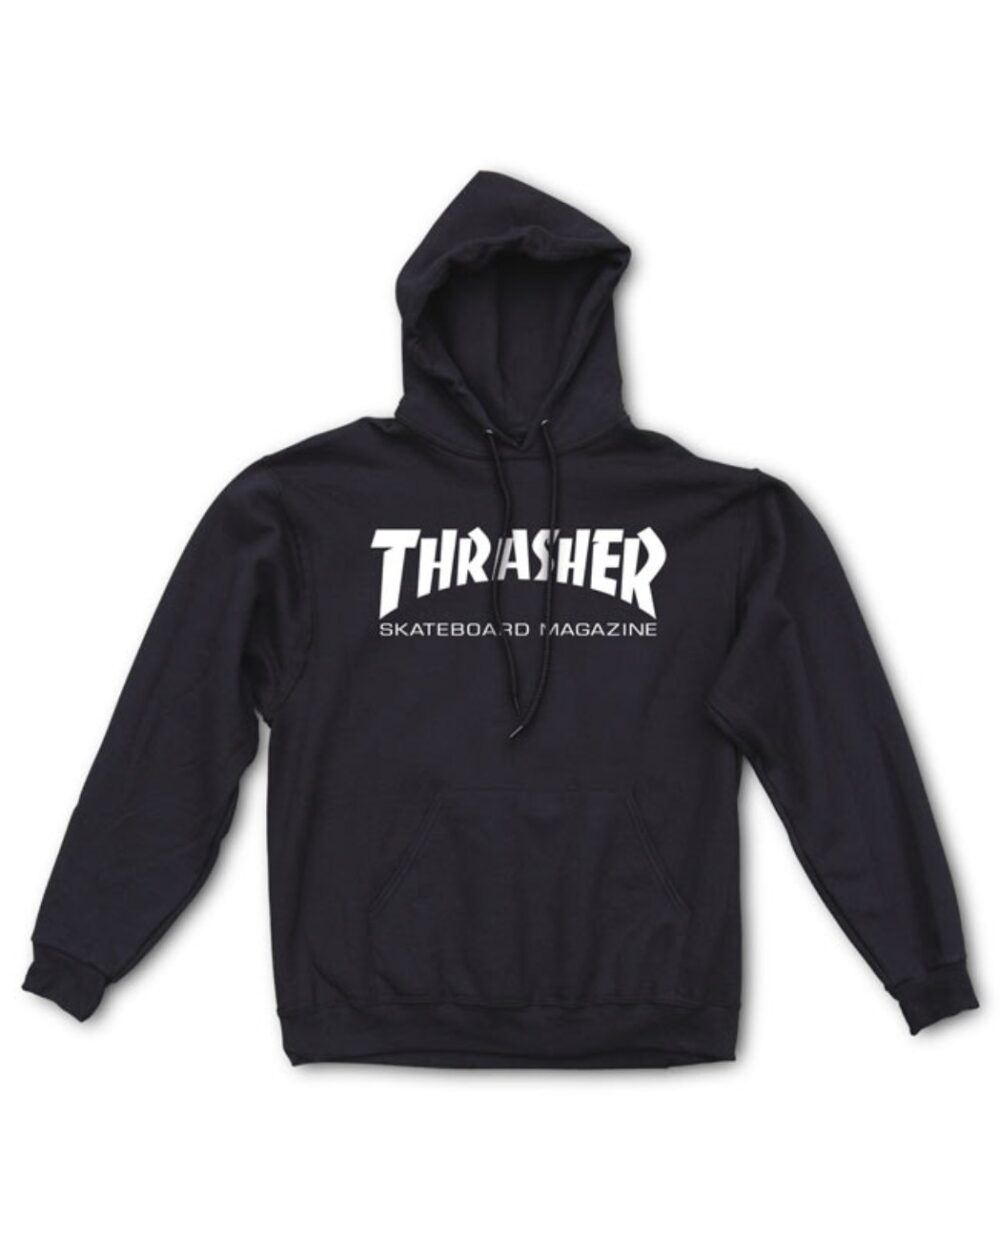 Thrasher Magazine Hoodie, Skateboarding Apparel, Classic Black Hooded Sweatshirt, Skateboarder's Wardrobe Essential, Iconic Thrasher Skate Mag Logo